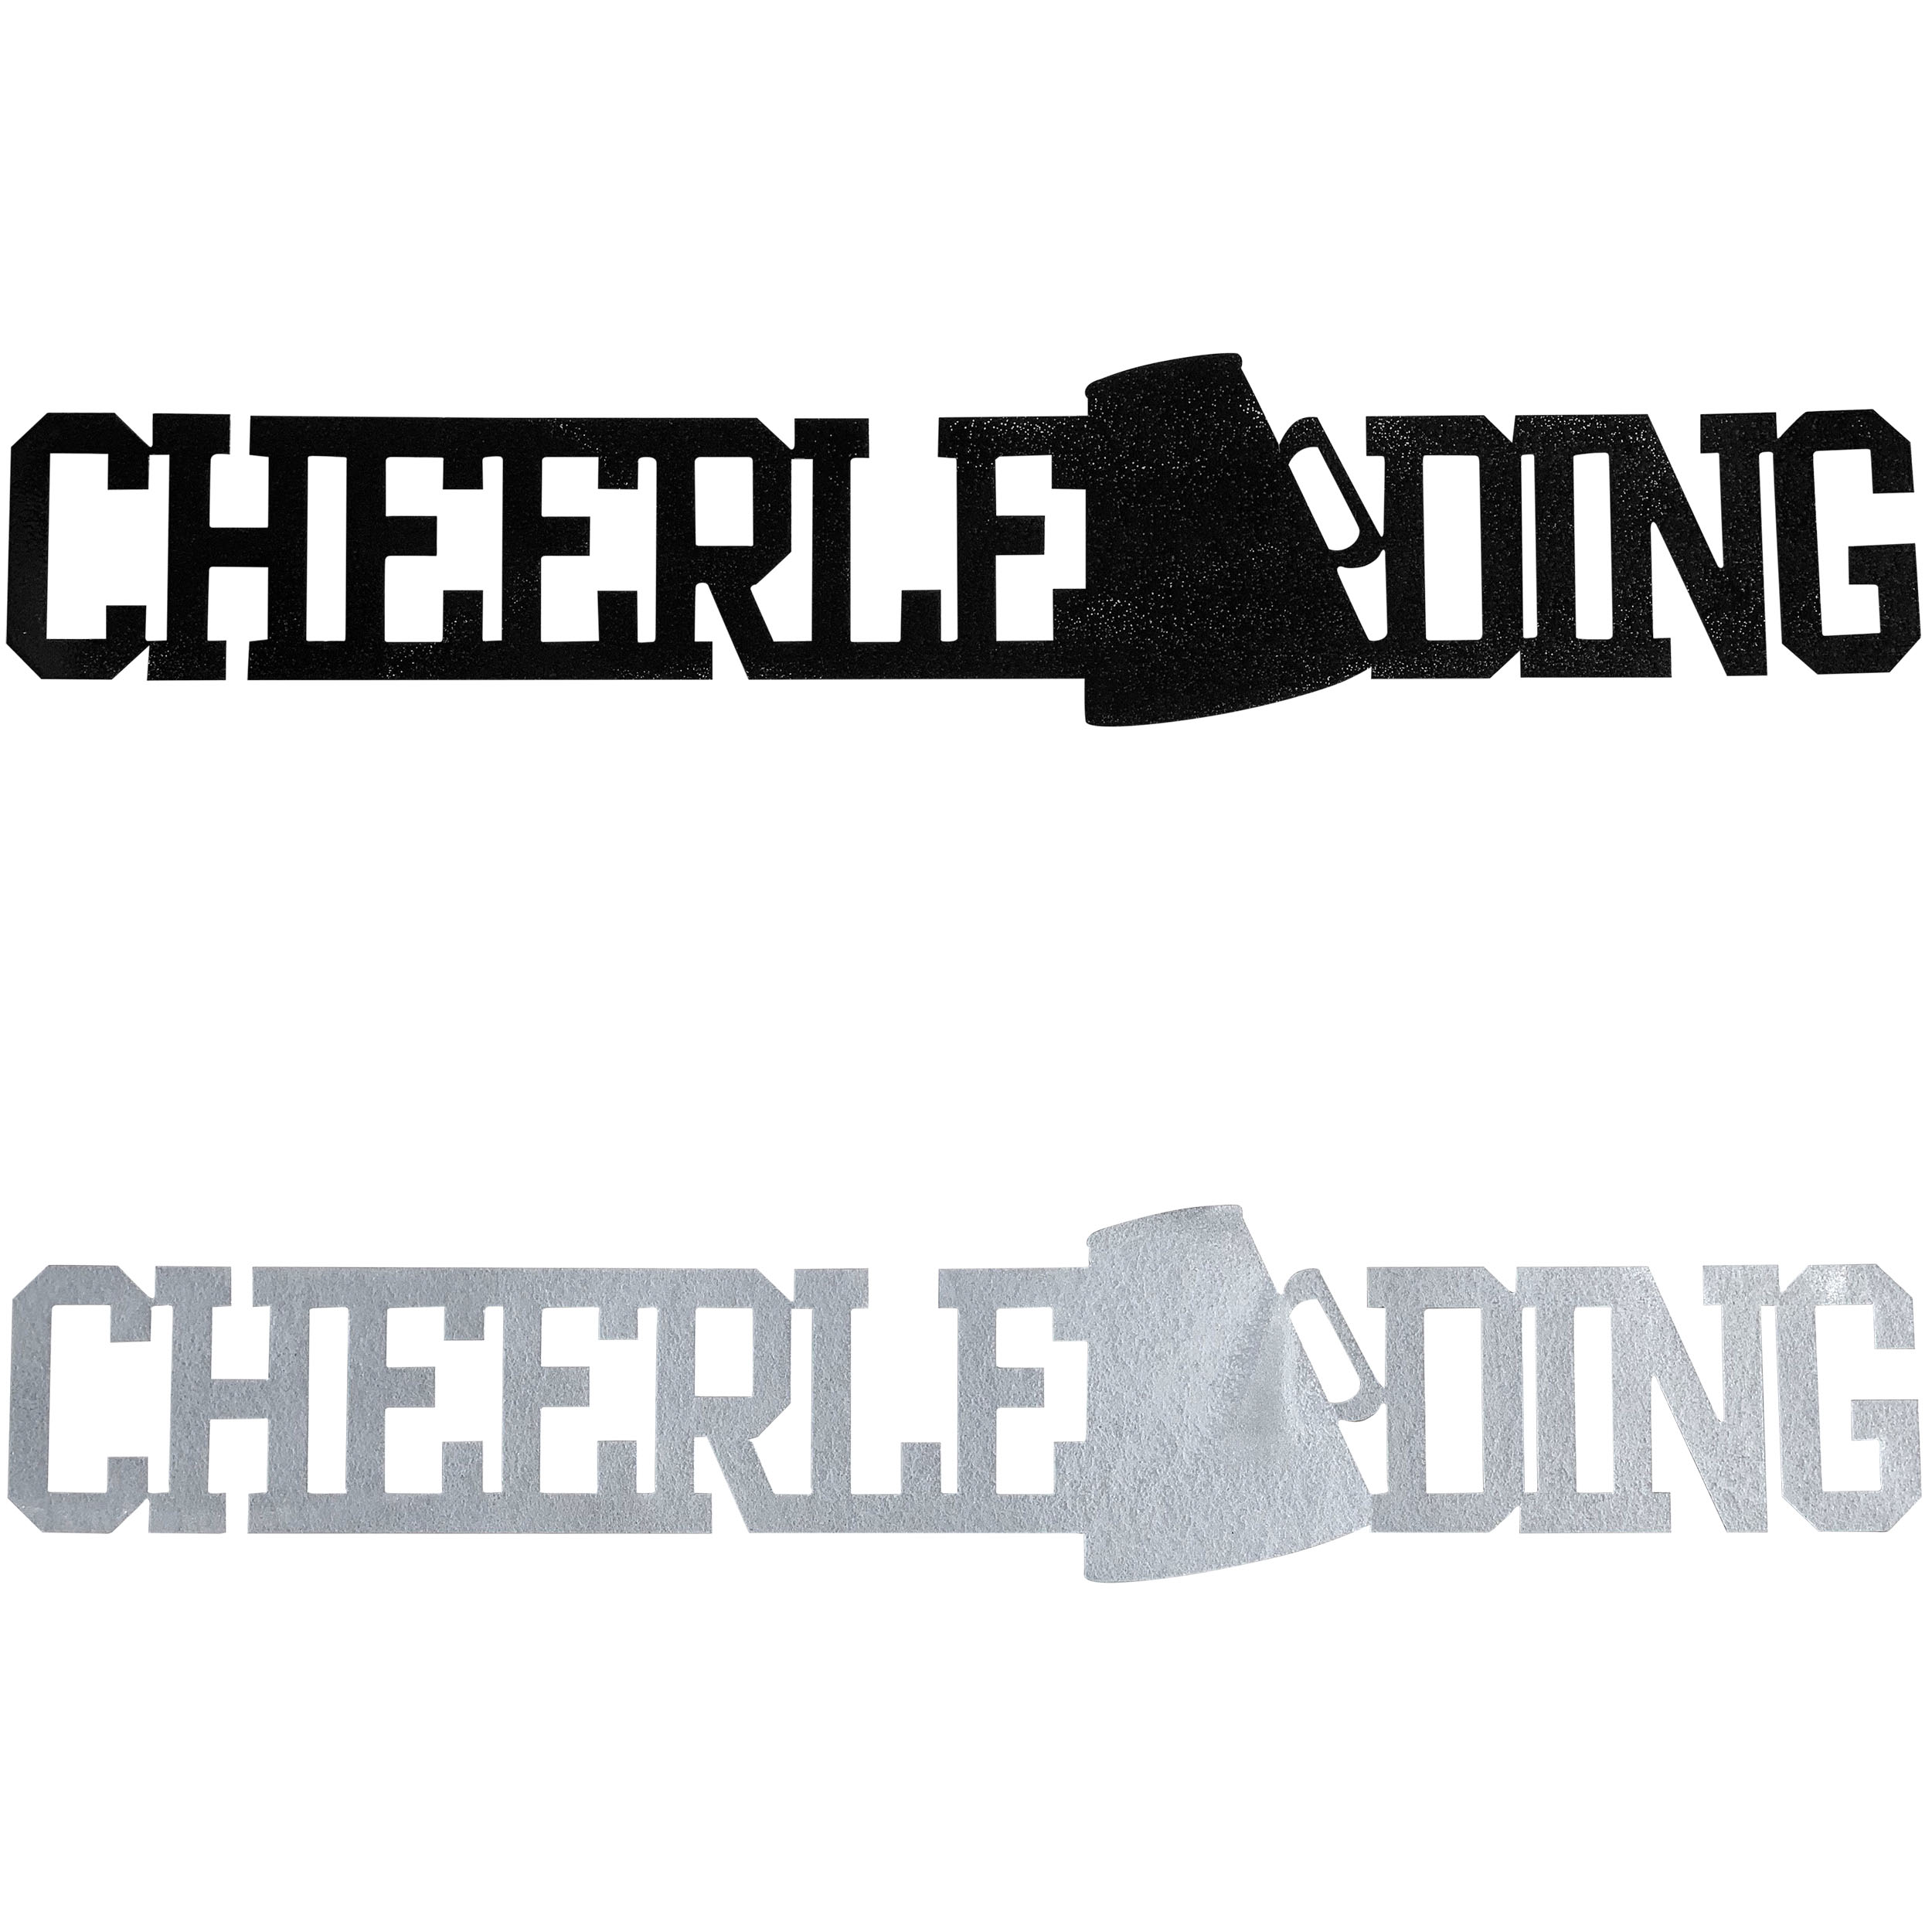 Cheerleading Word by Dugout Creek Designs